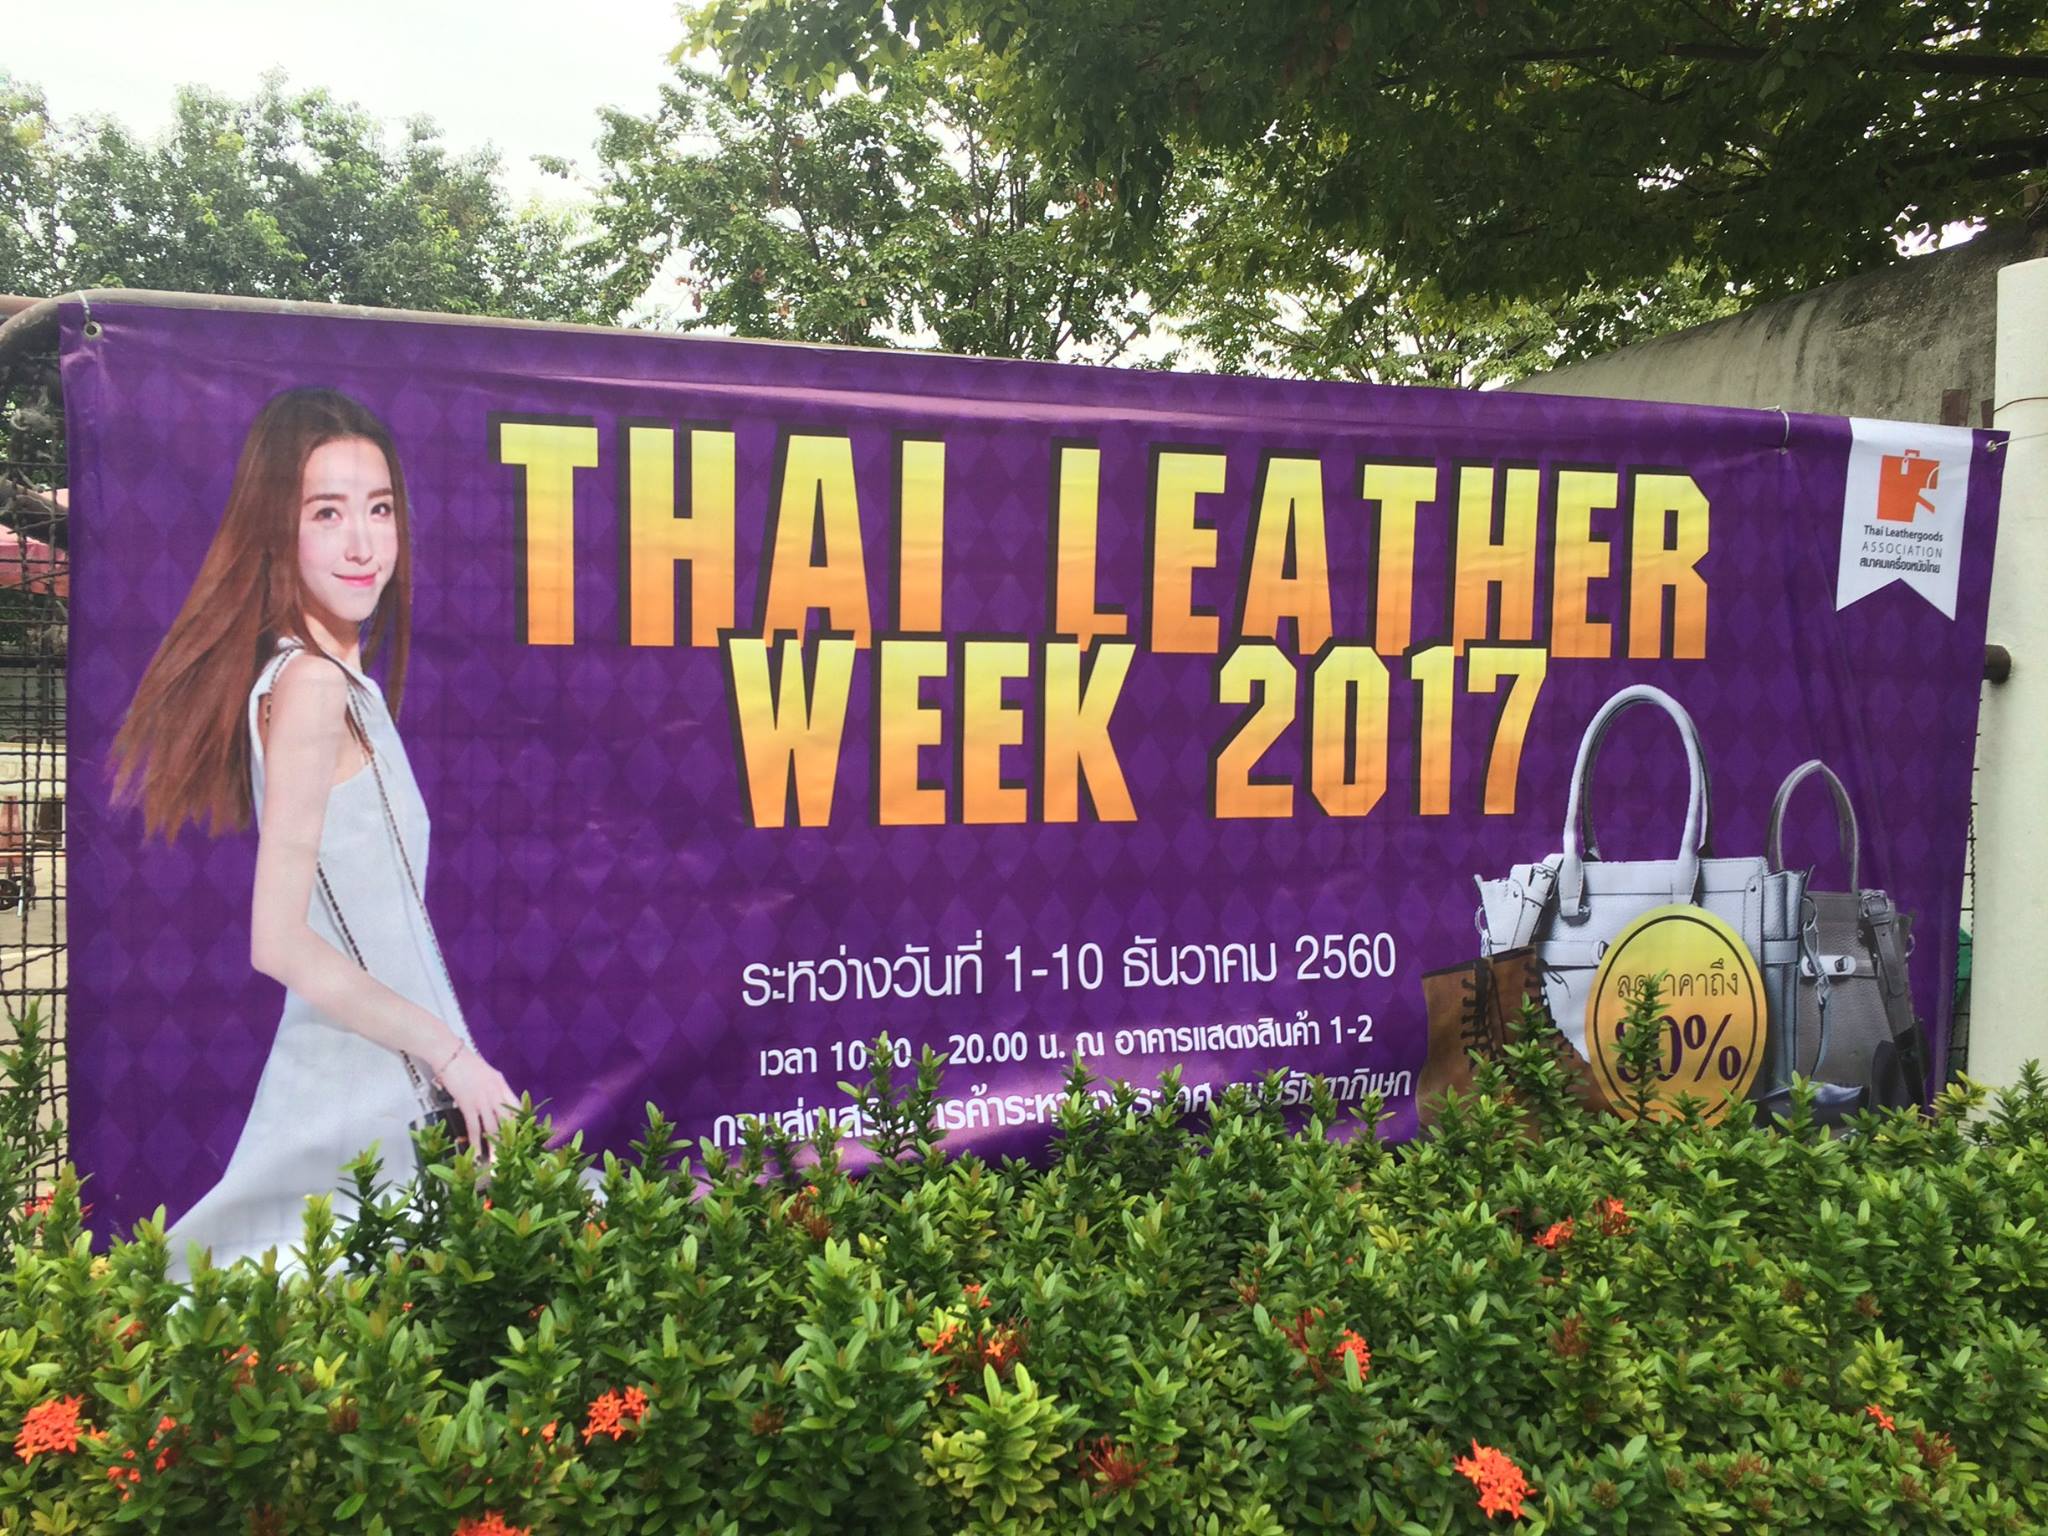 Thai Leather Week 2017